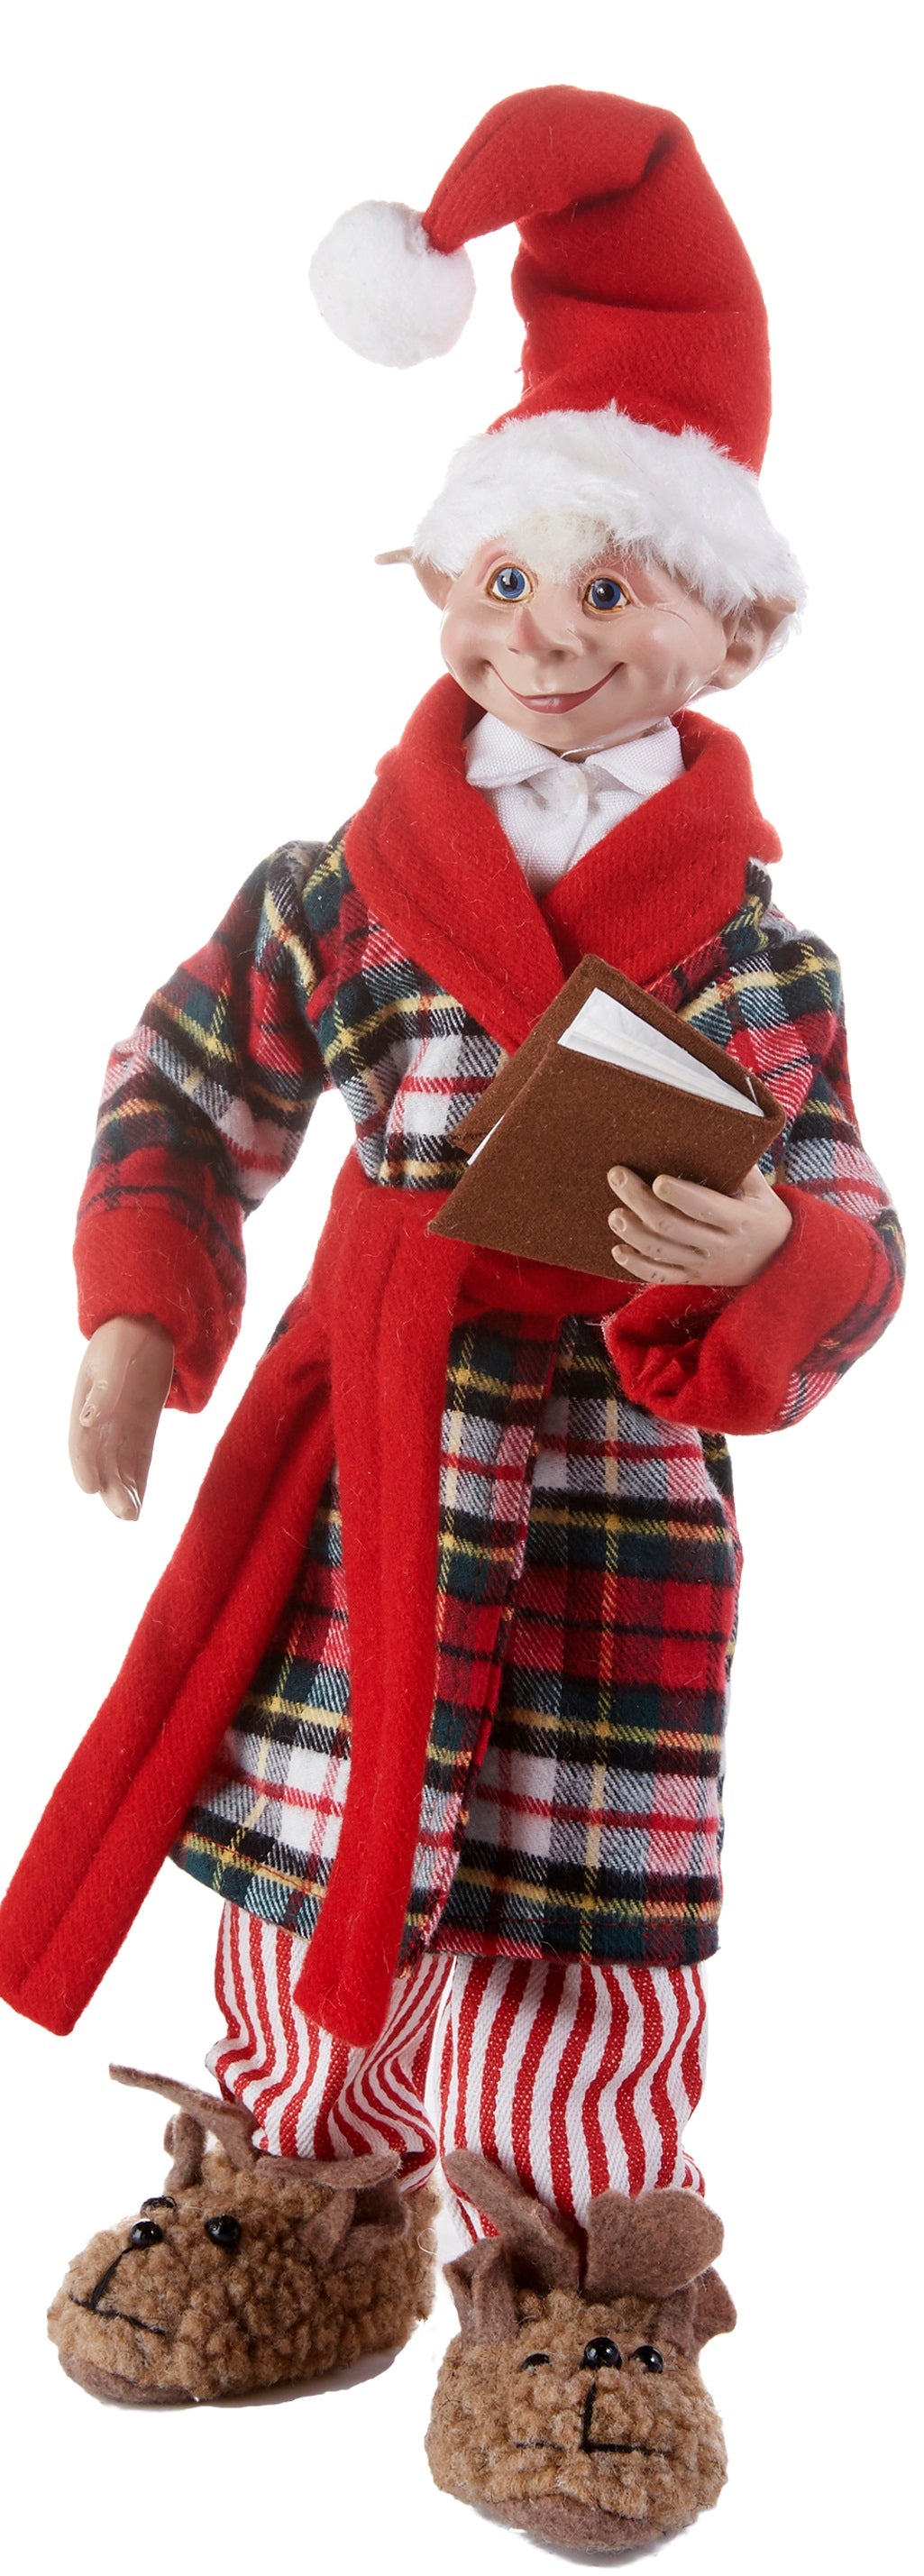 Posable Pajama Elf